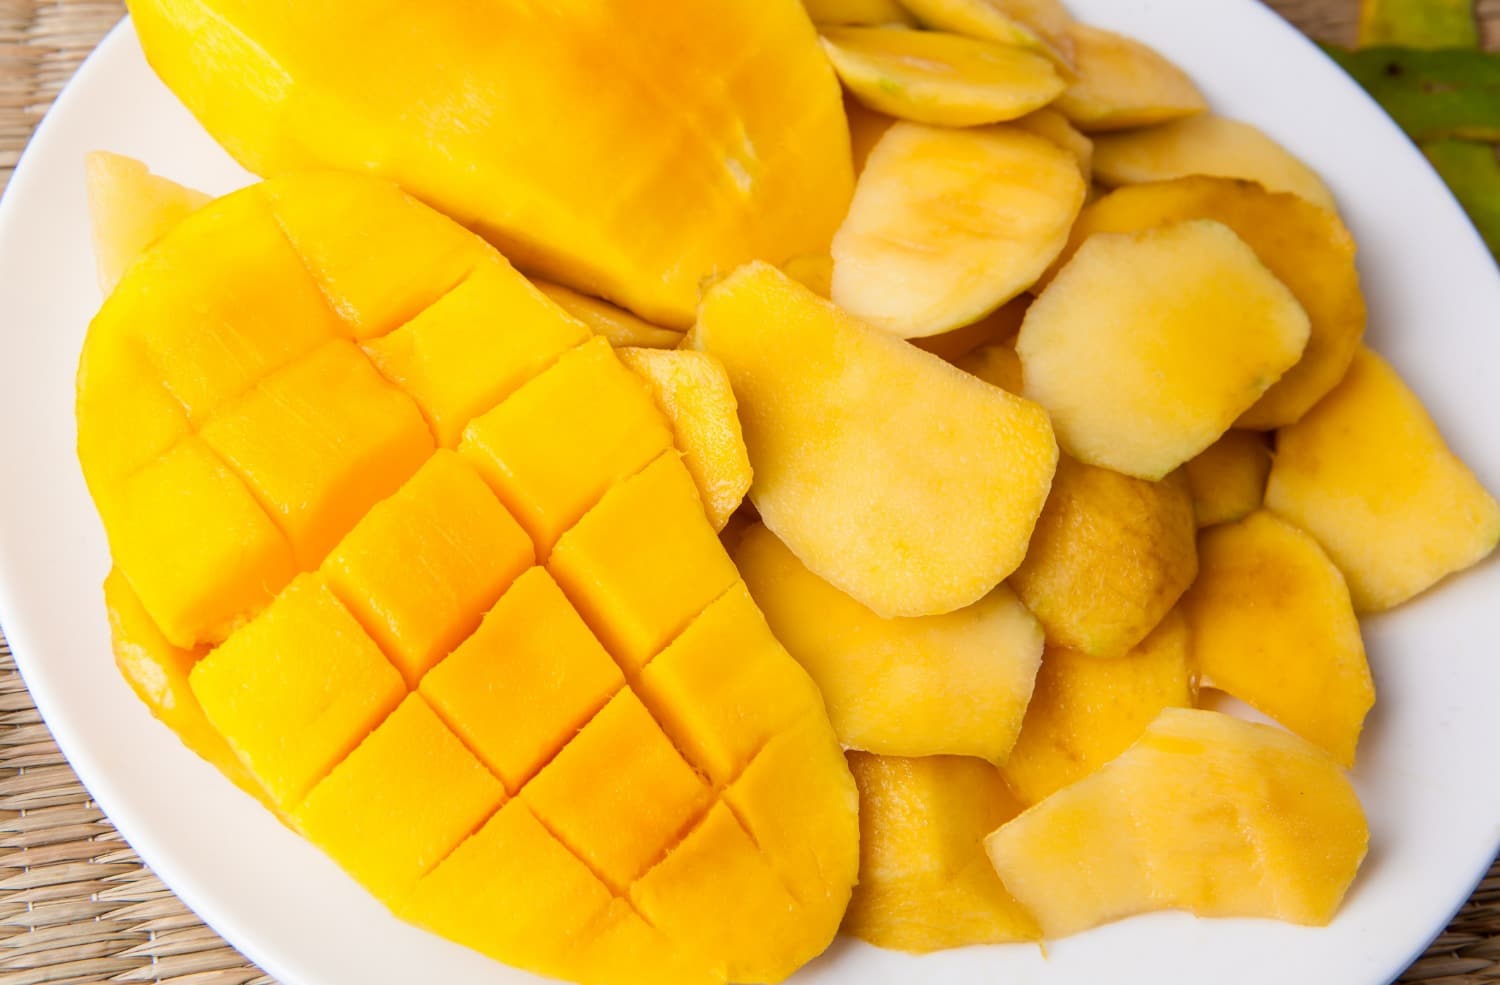 Cut mango is kept on the plate